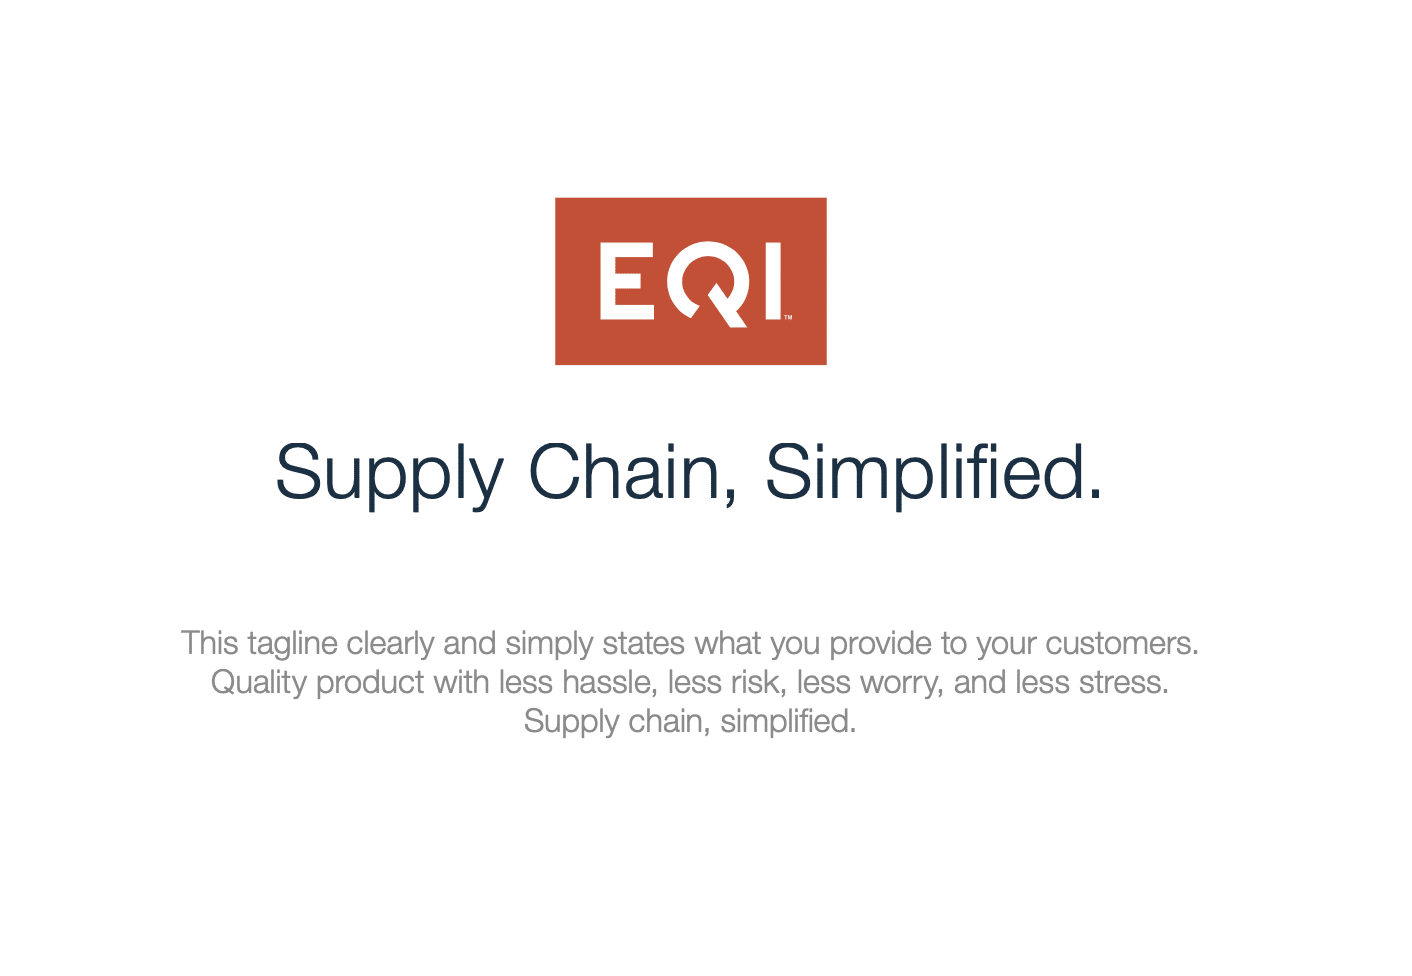 EQI Tagline: Supply Chain, Simplified